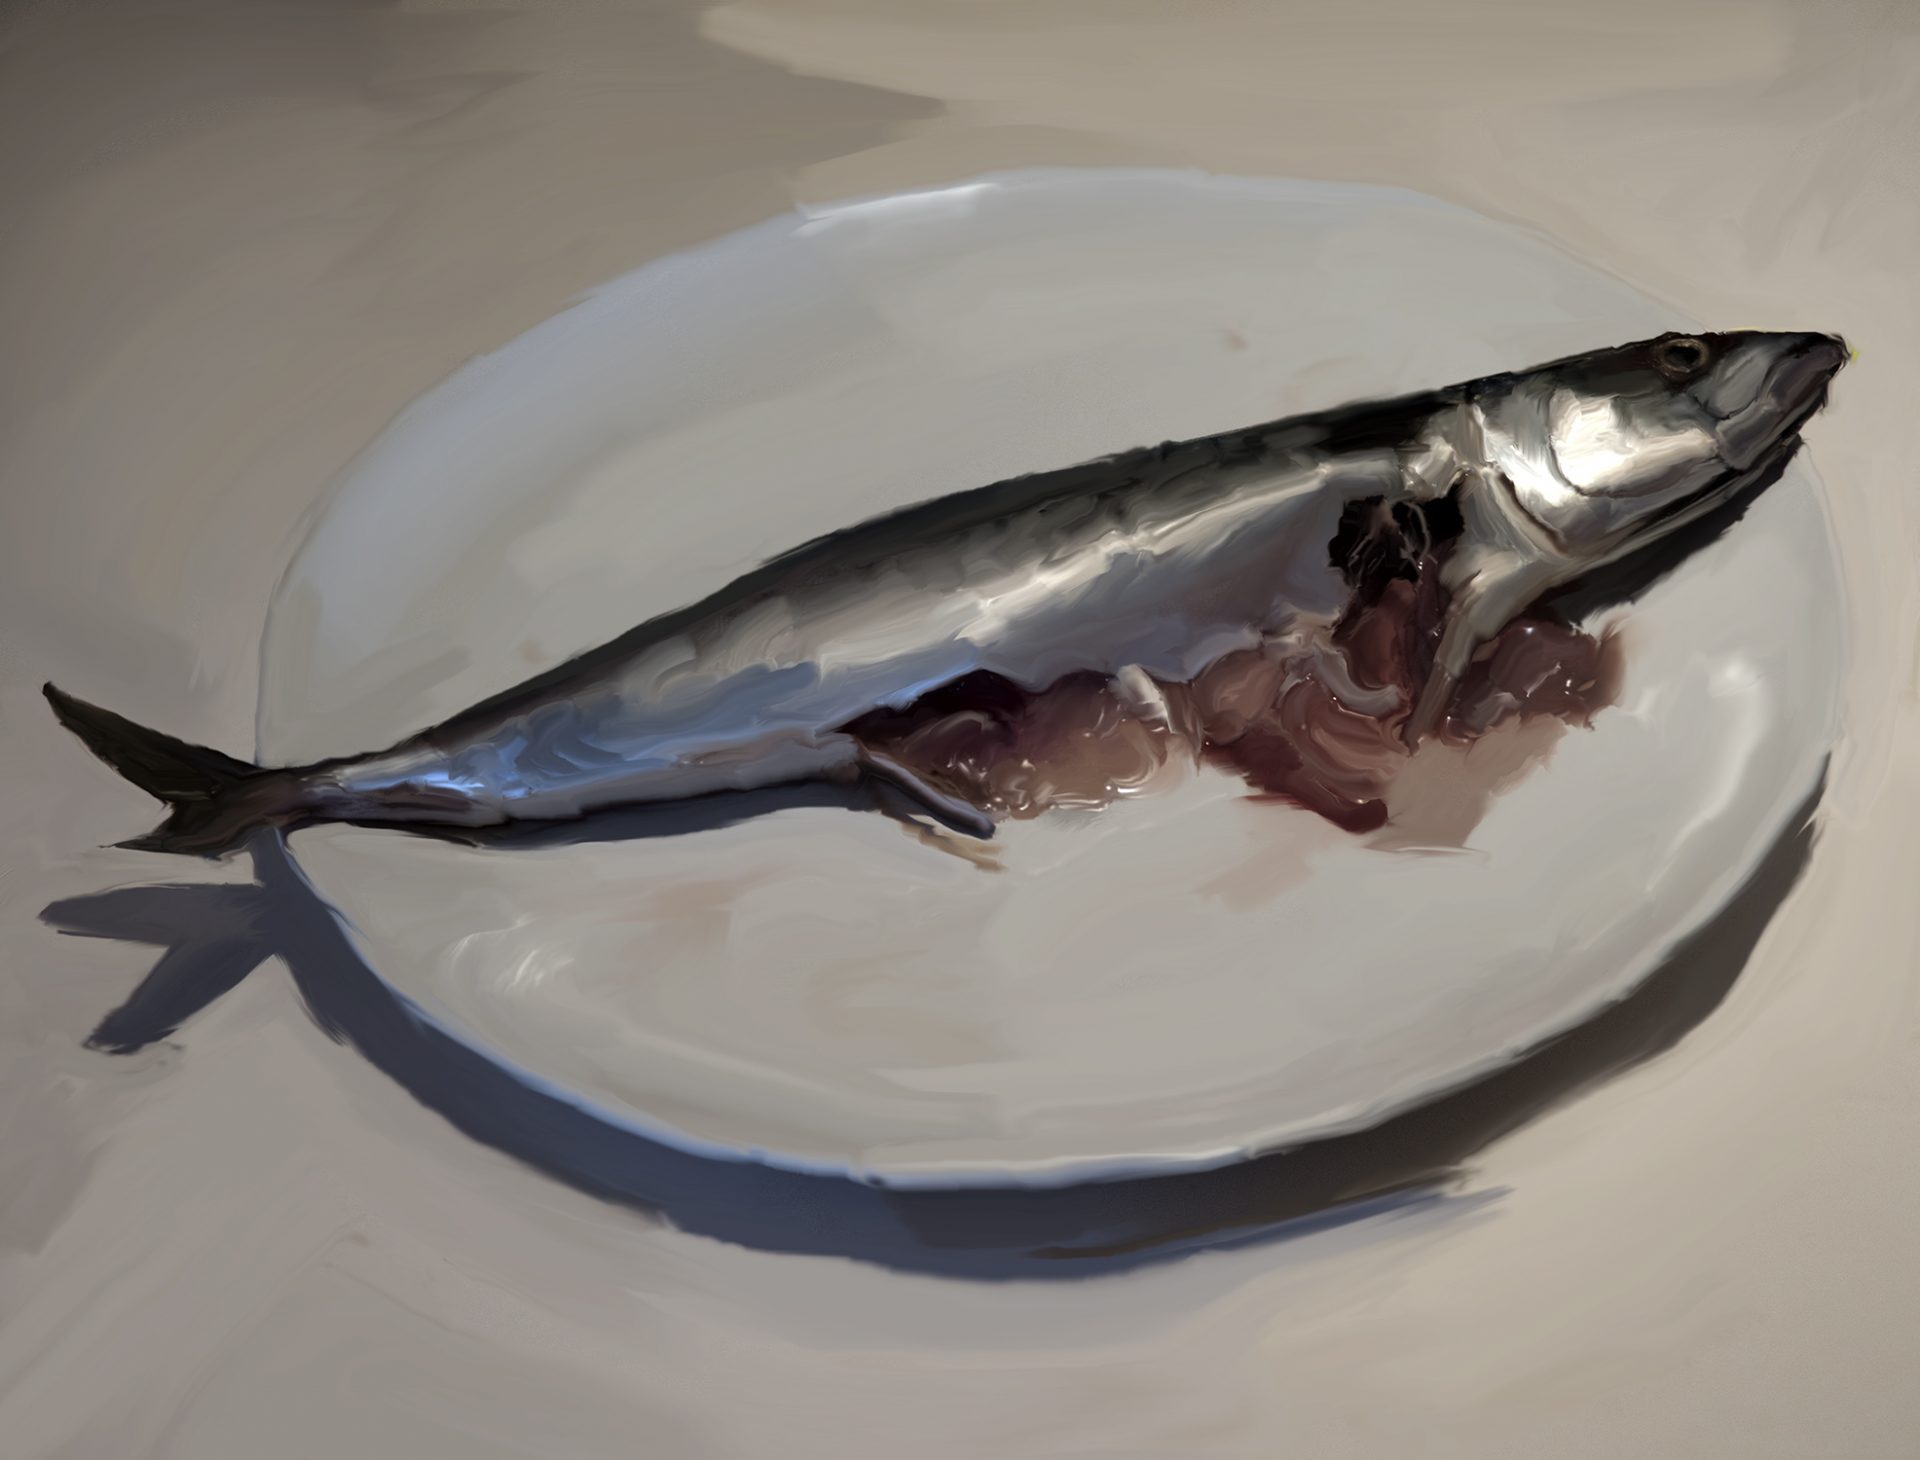 Disemboweled mackerel_2019_glicee Photographic print 50.9 x 60.9cms